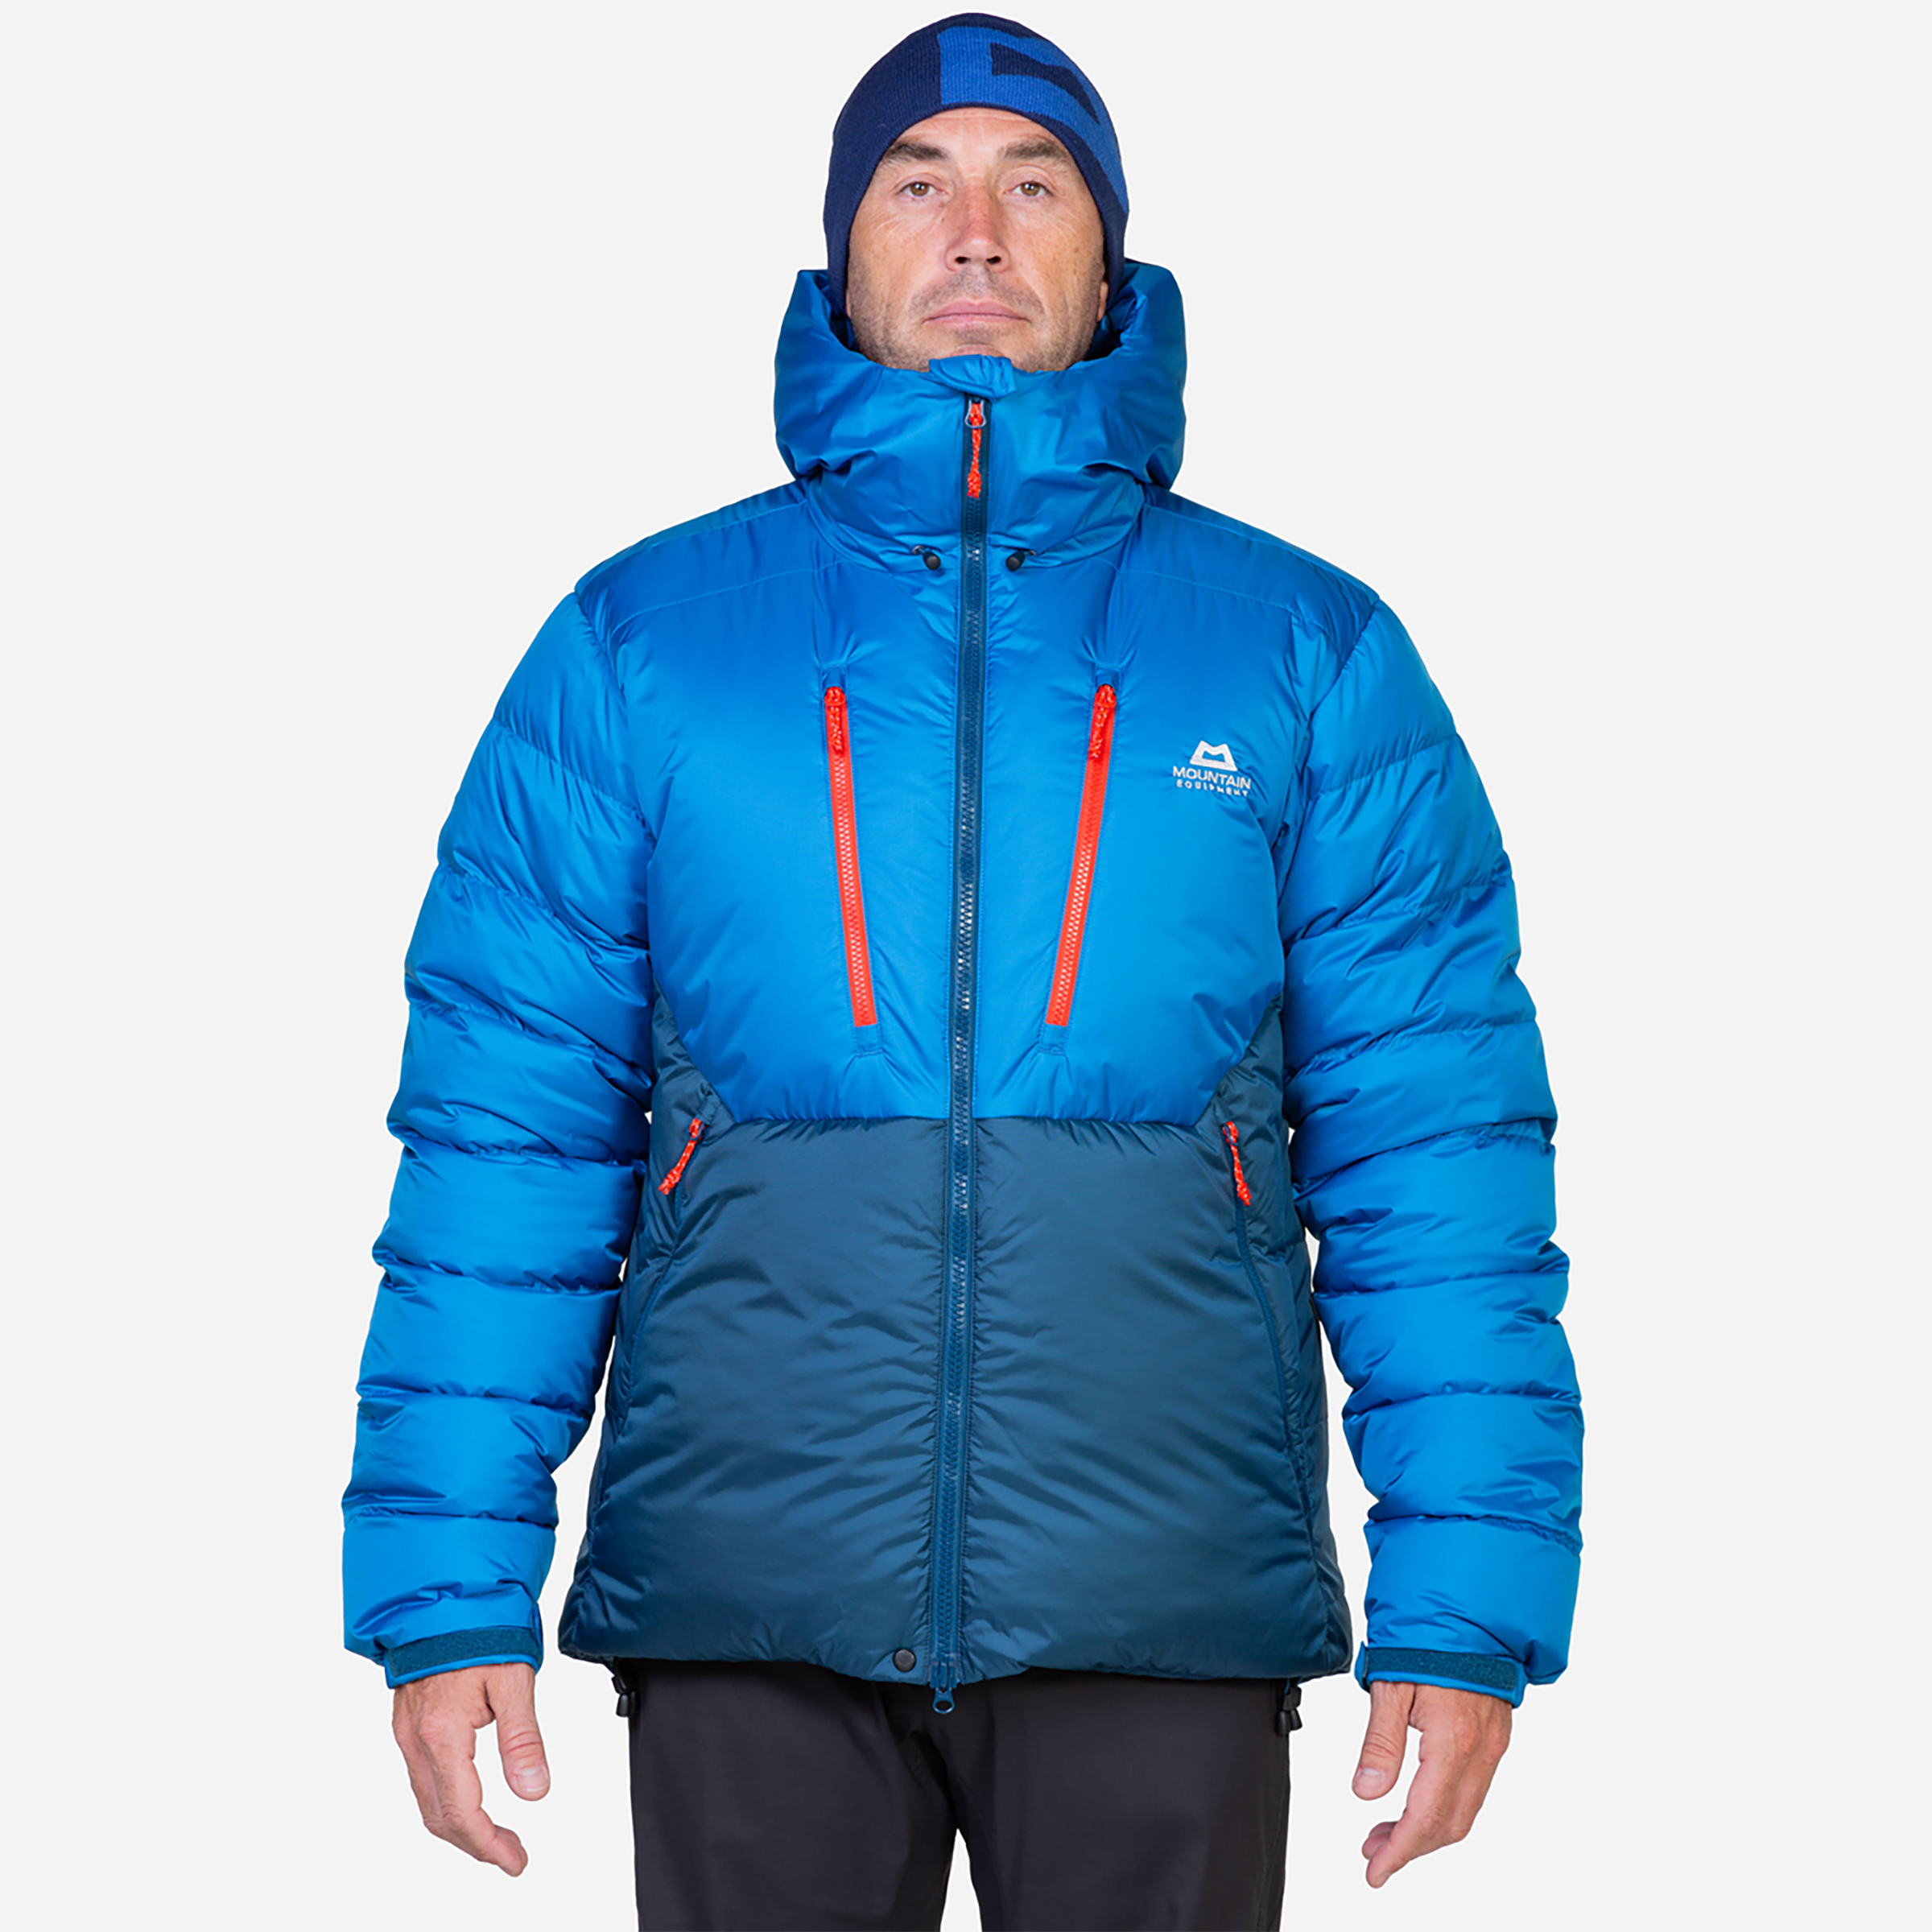 Annapurna Men's Jacket